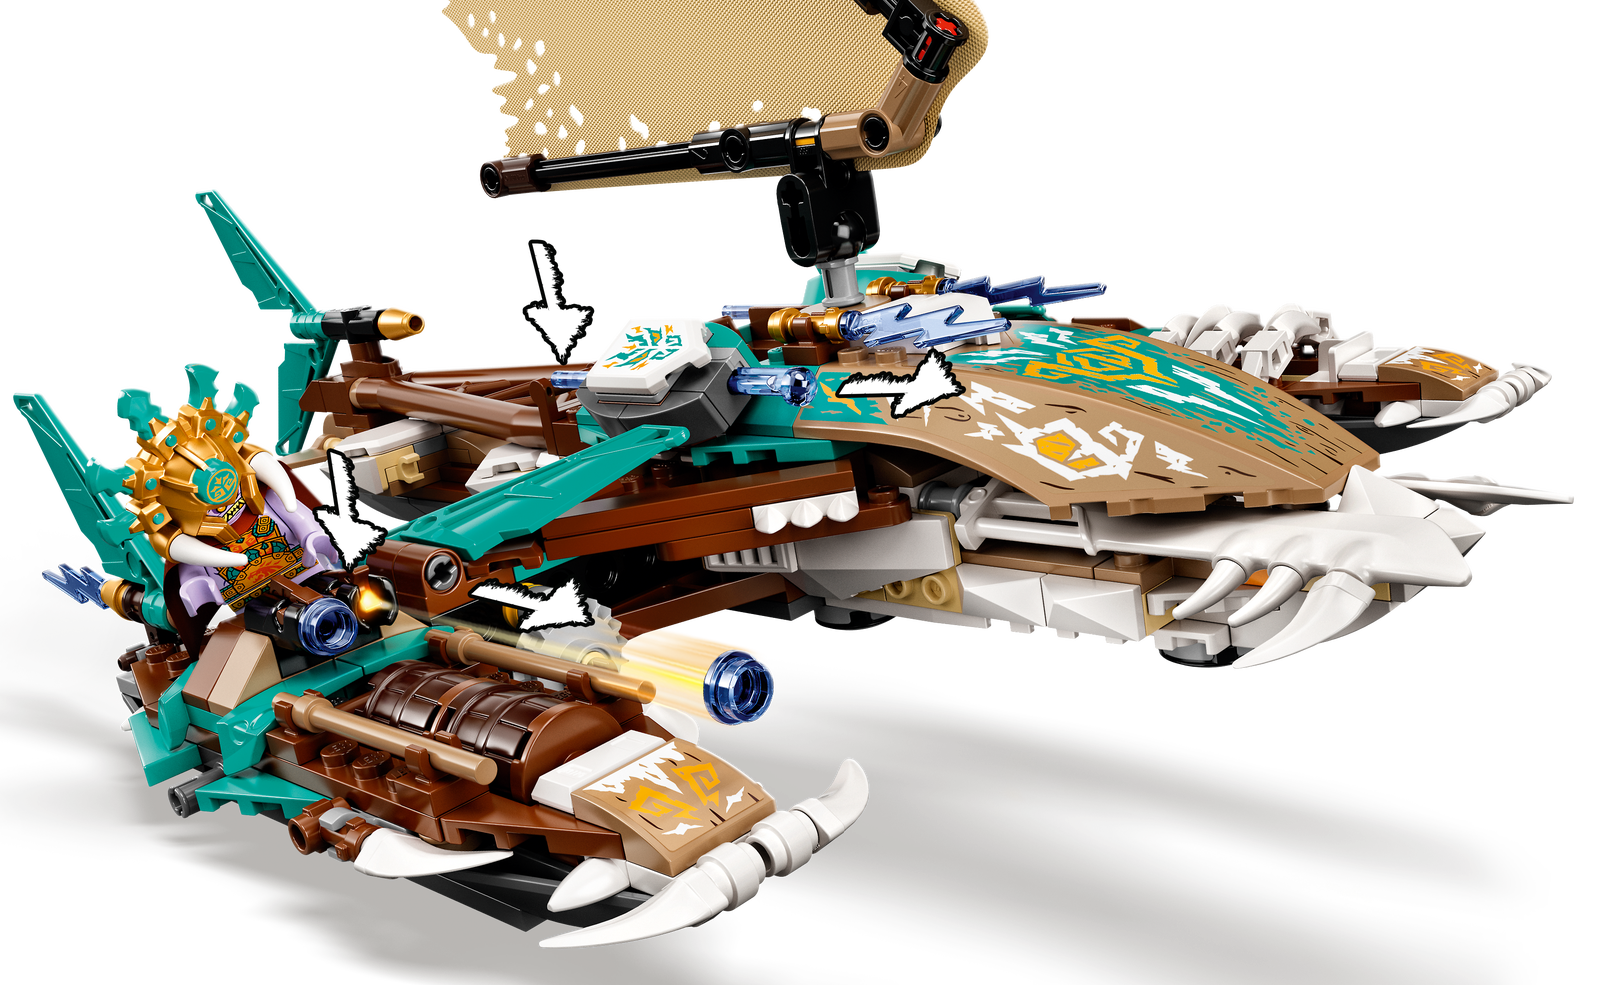 Lego Ninjago Catamaran Sea Battle 71748